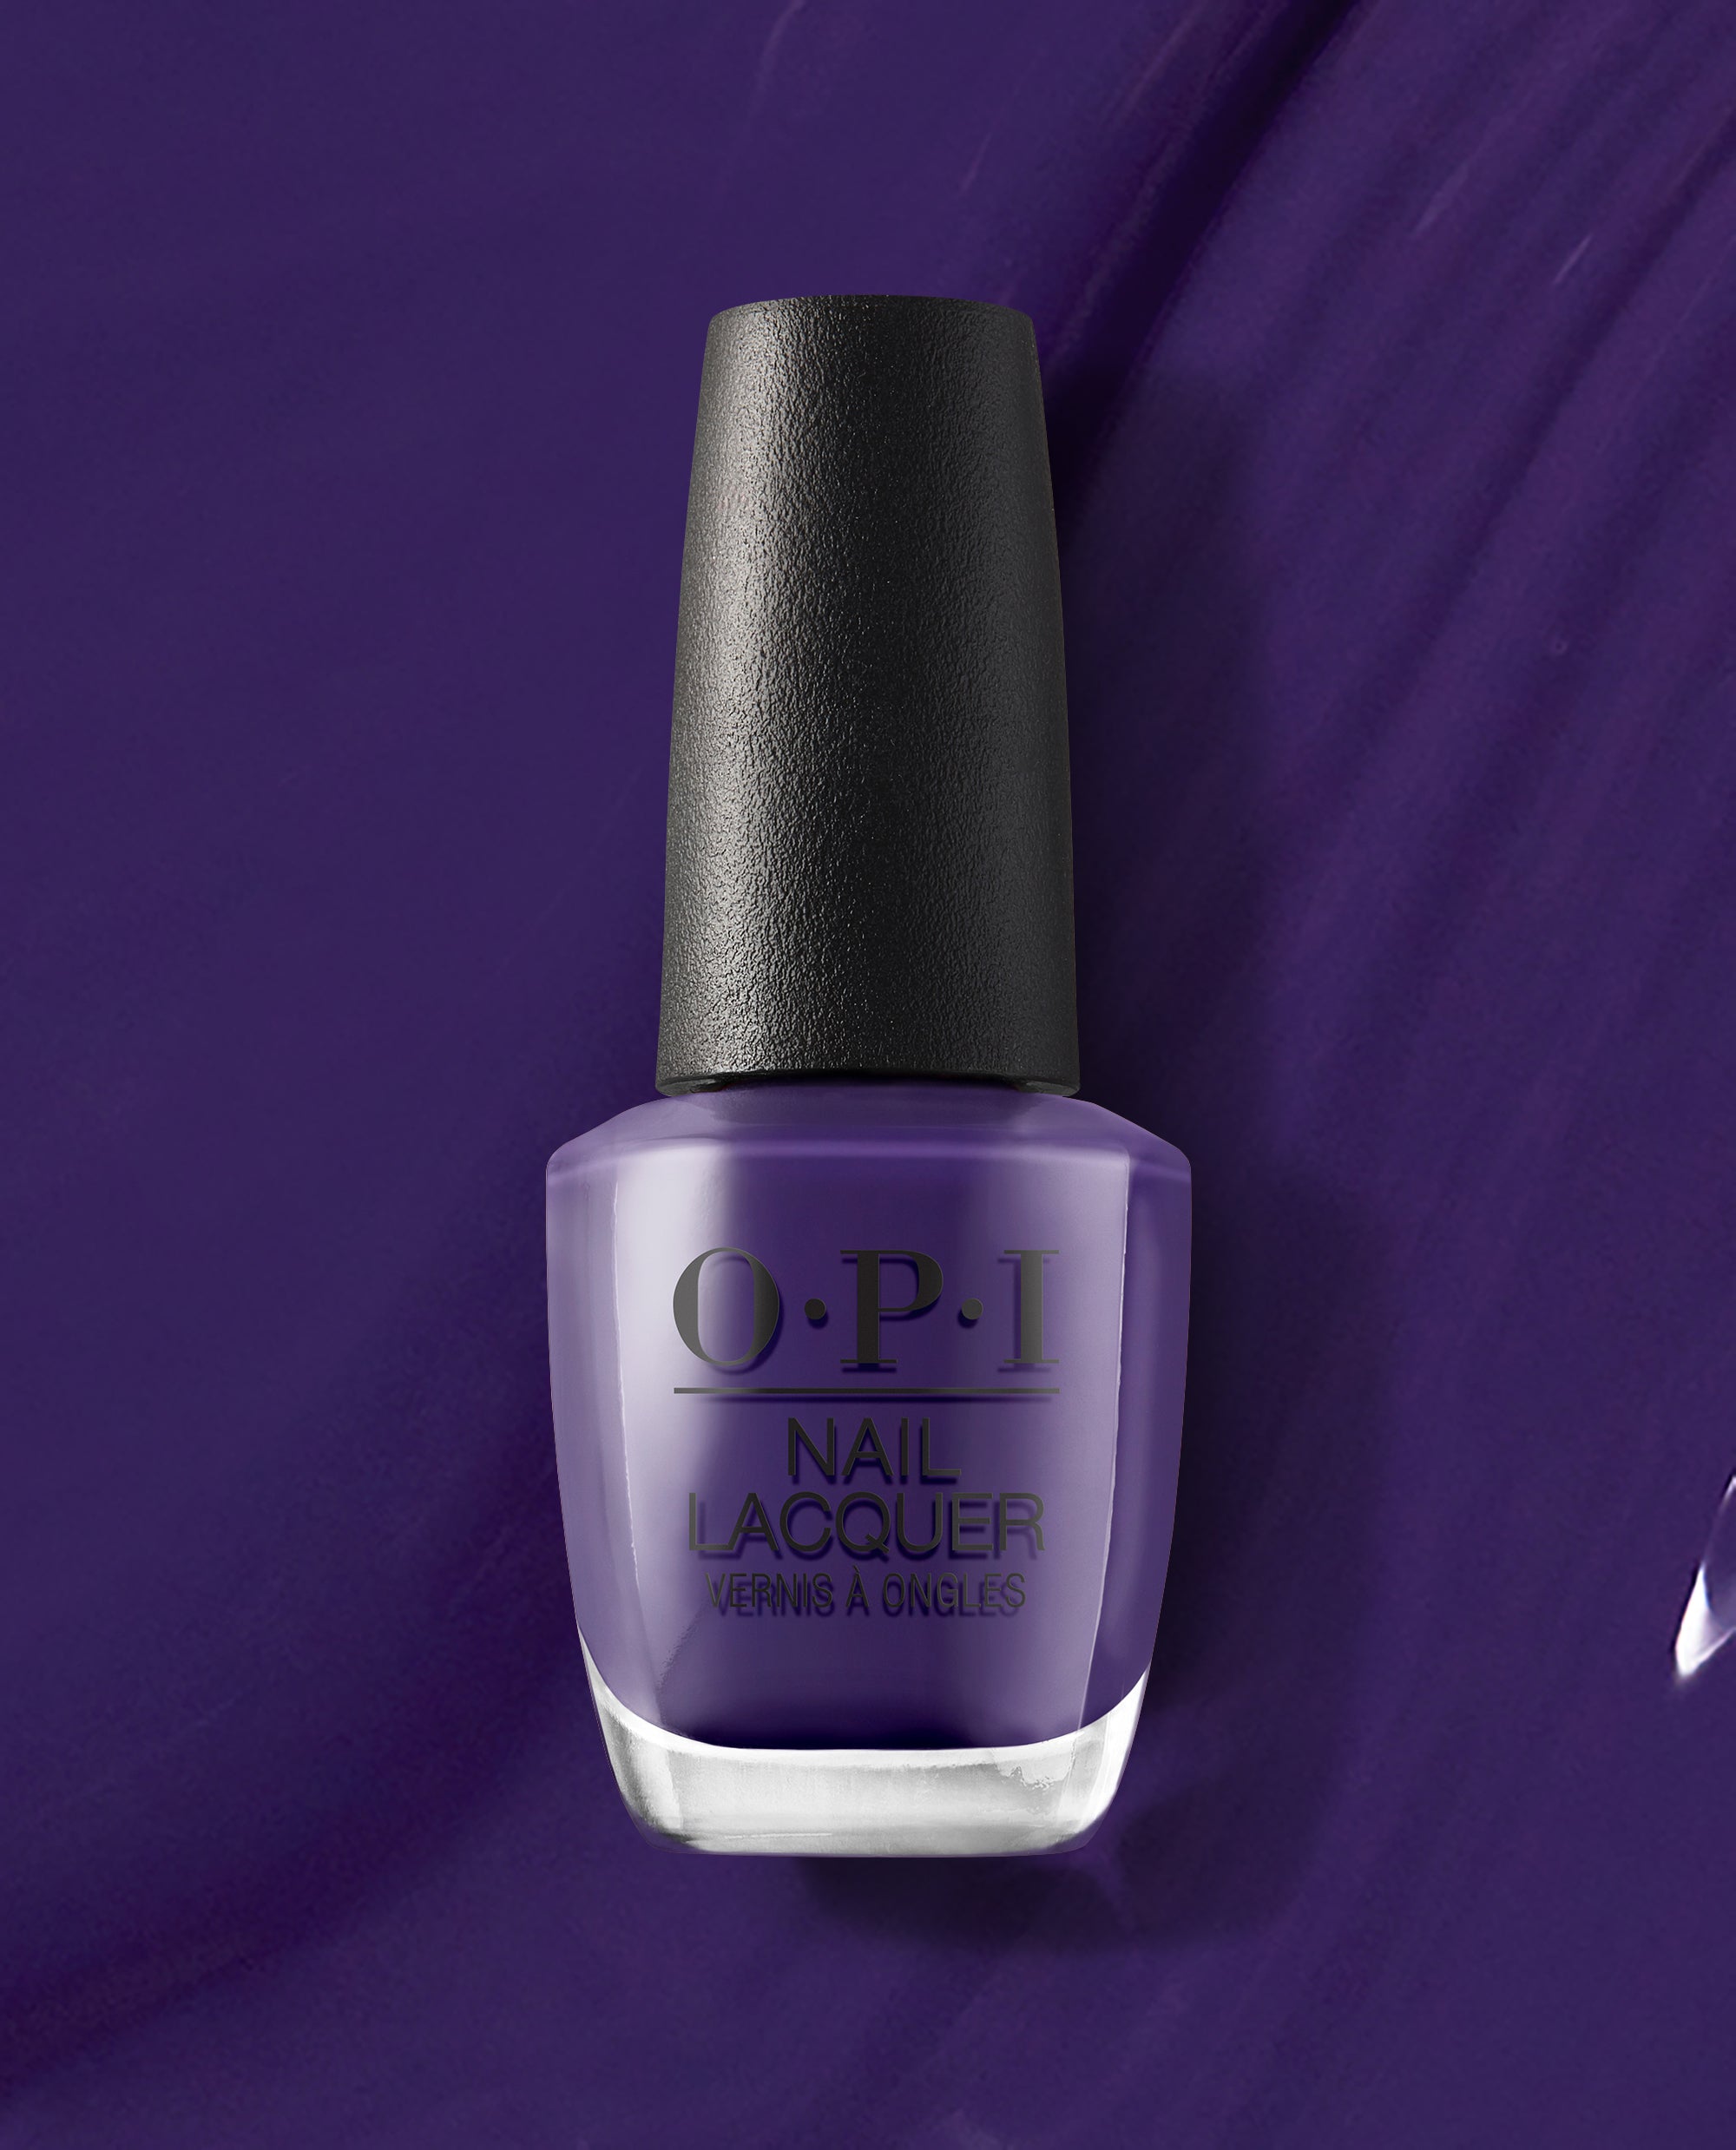 OPI Nail Colors | Opi nail colors, Opi nail polish colors, Nail colors